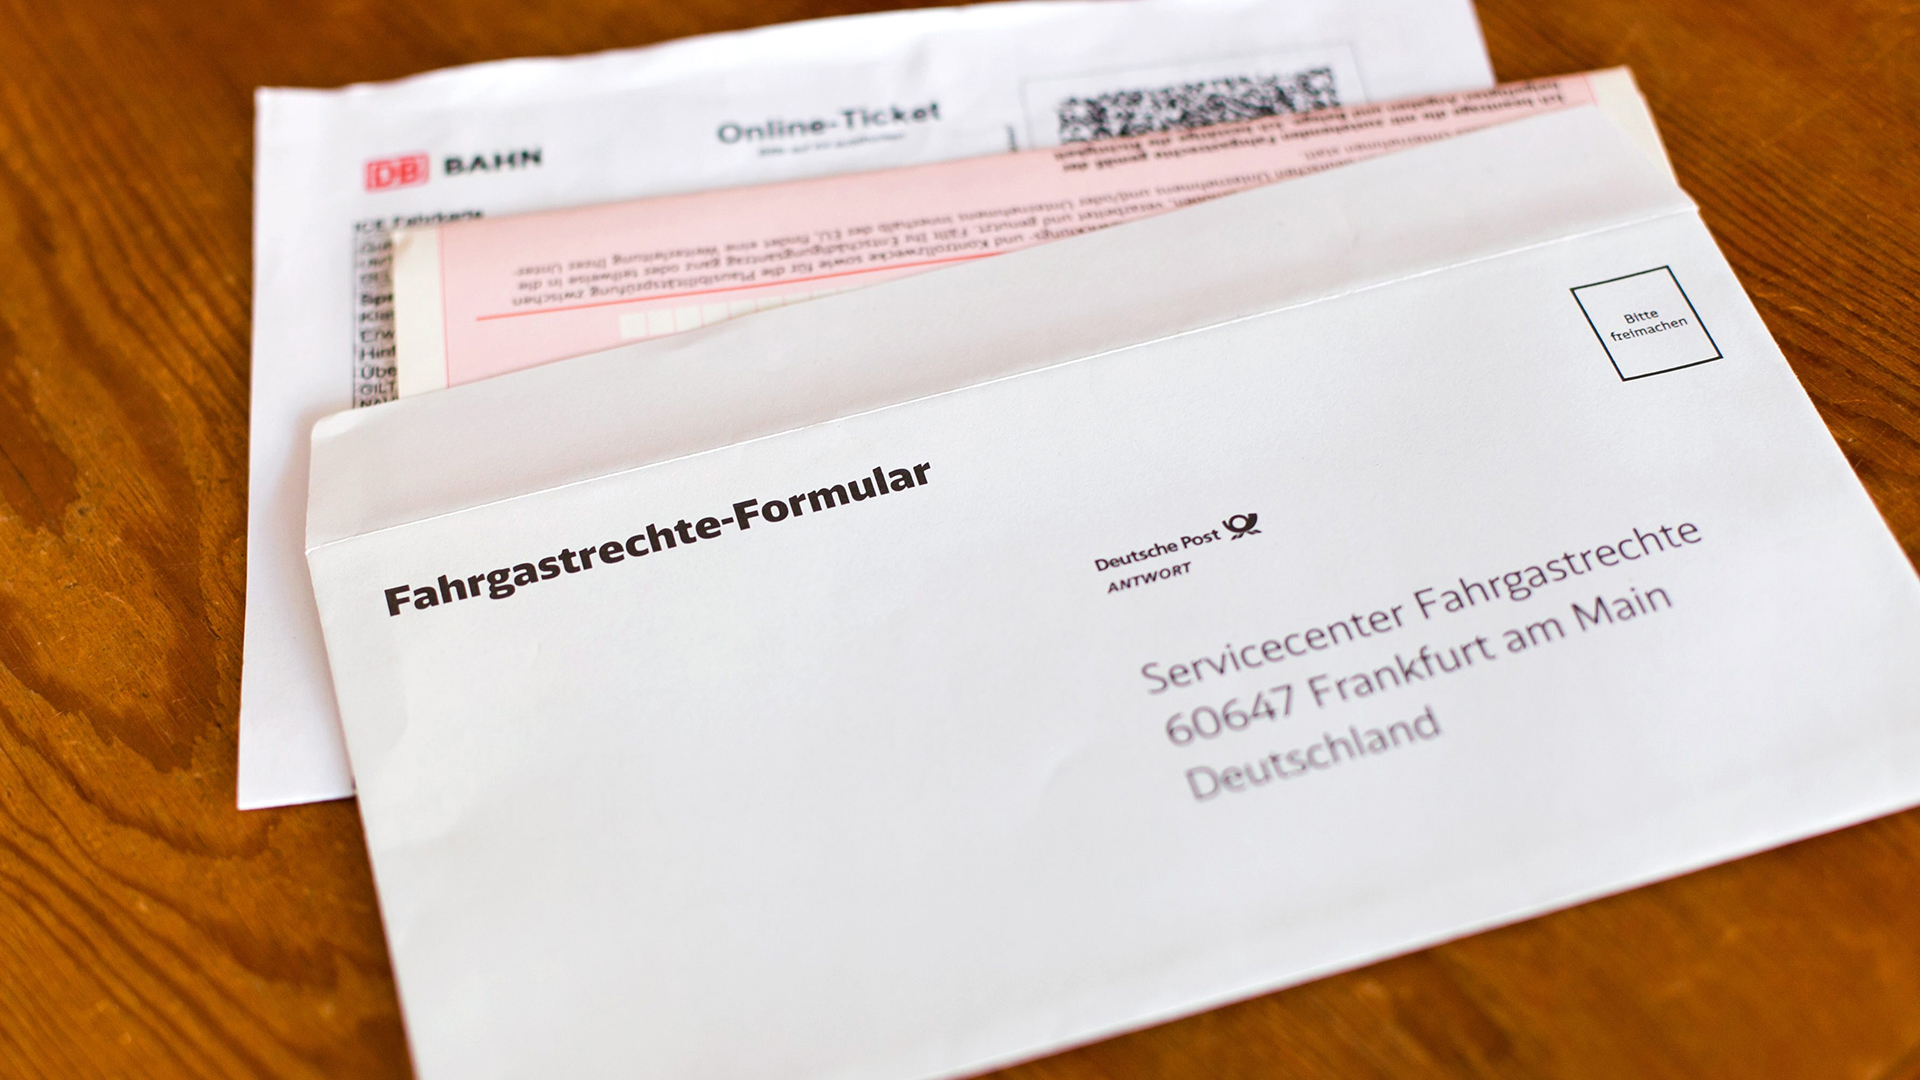 Formular für Fahrgastrechte | picture alliance / Moritz Vennem